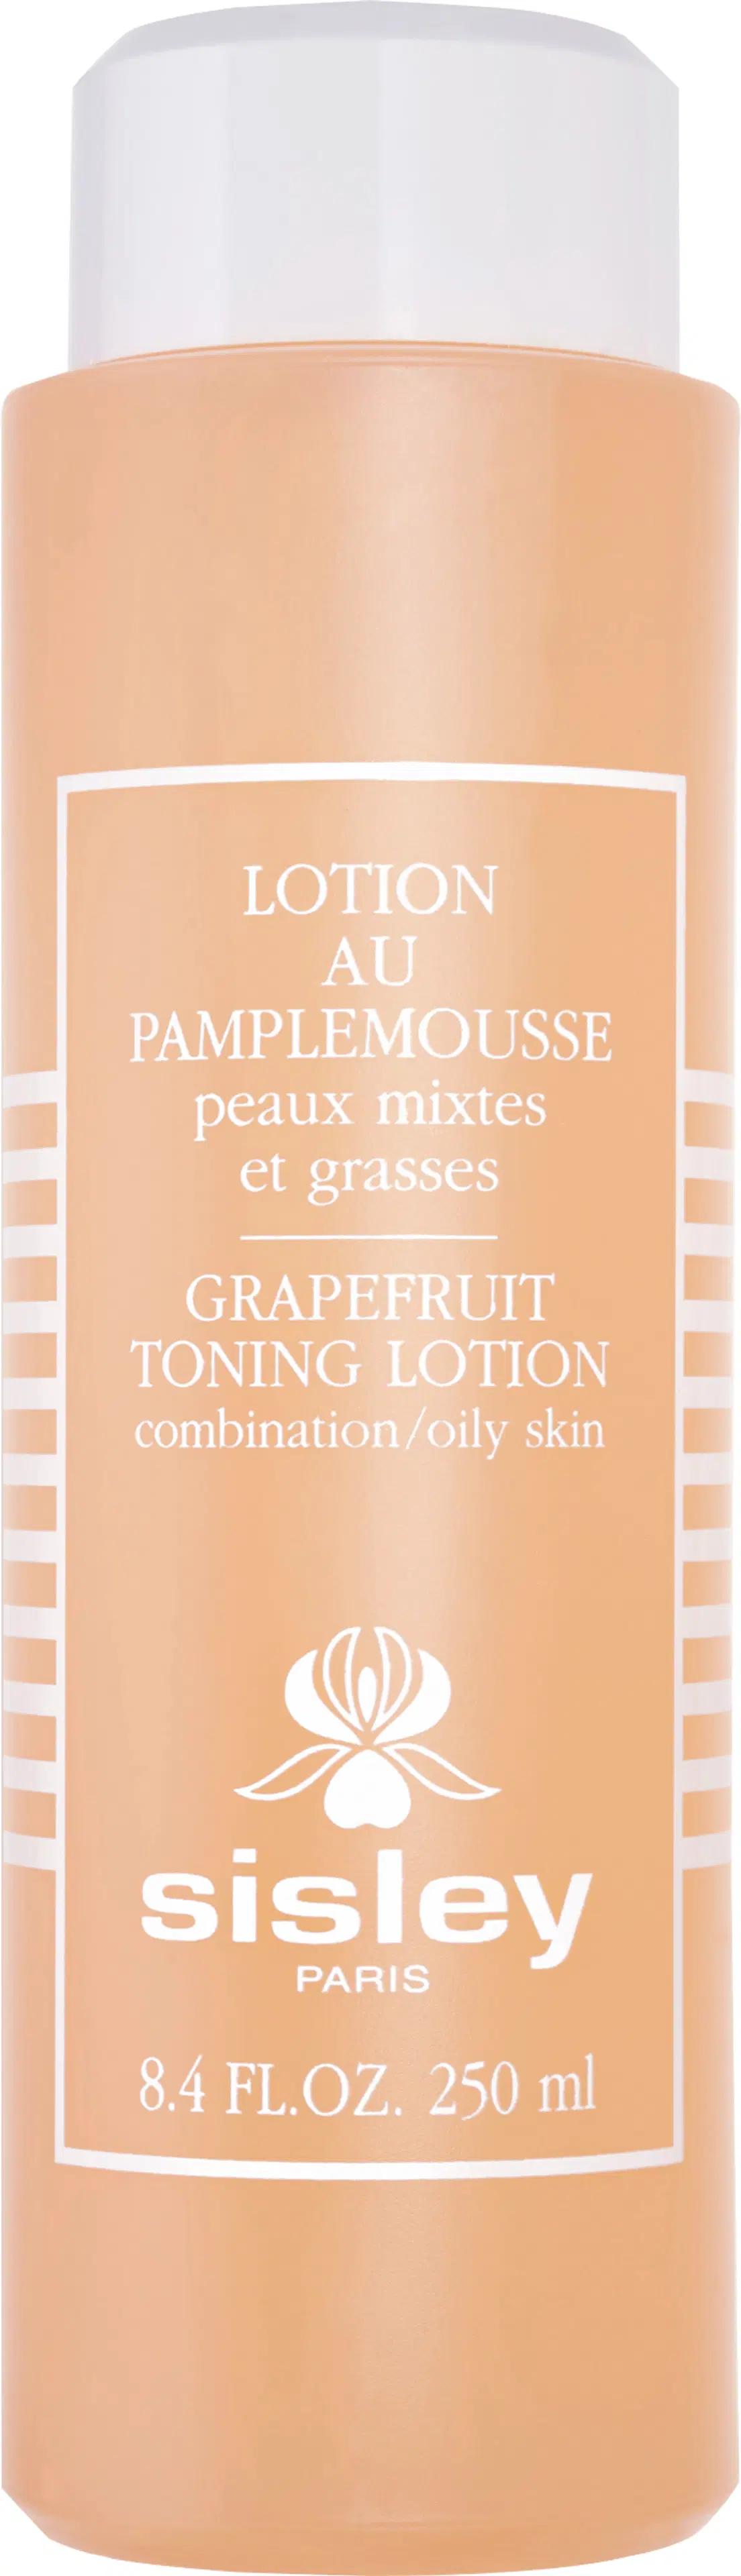 Sisley Paris Grapefruit Toning Lotion kasvovesi 250 ml